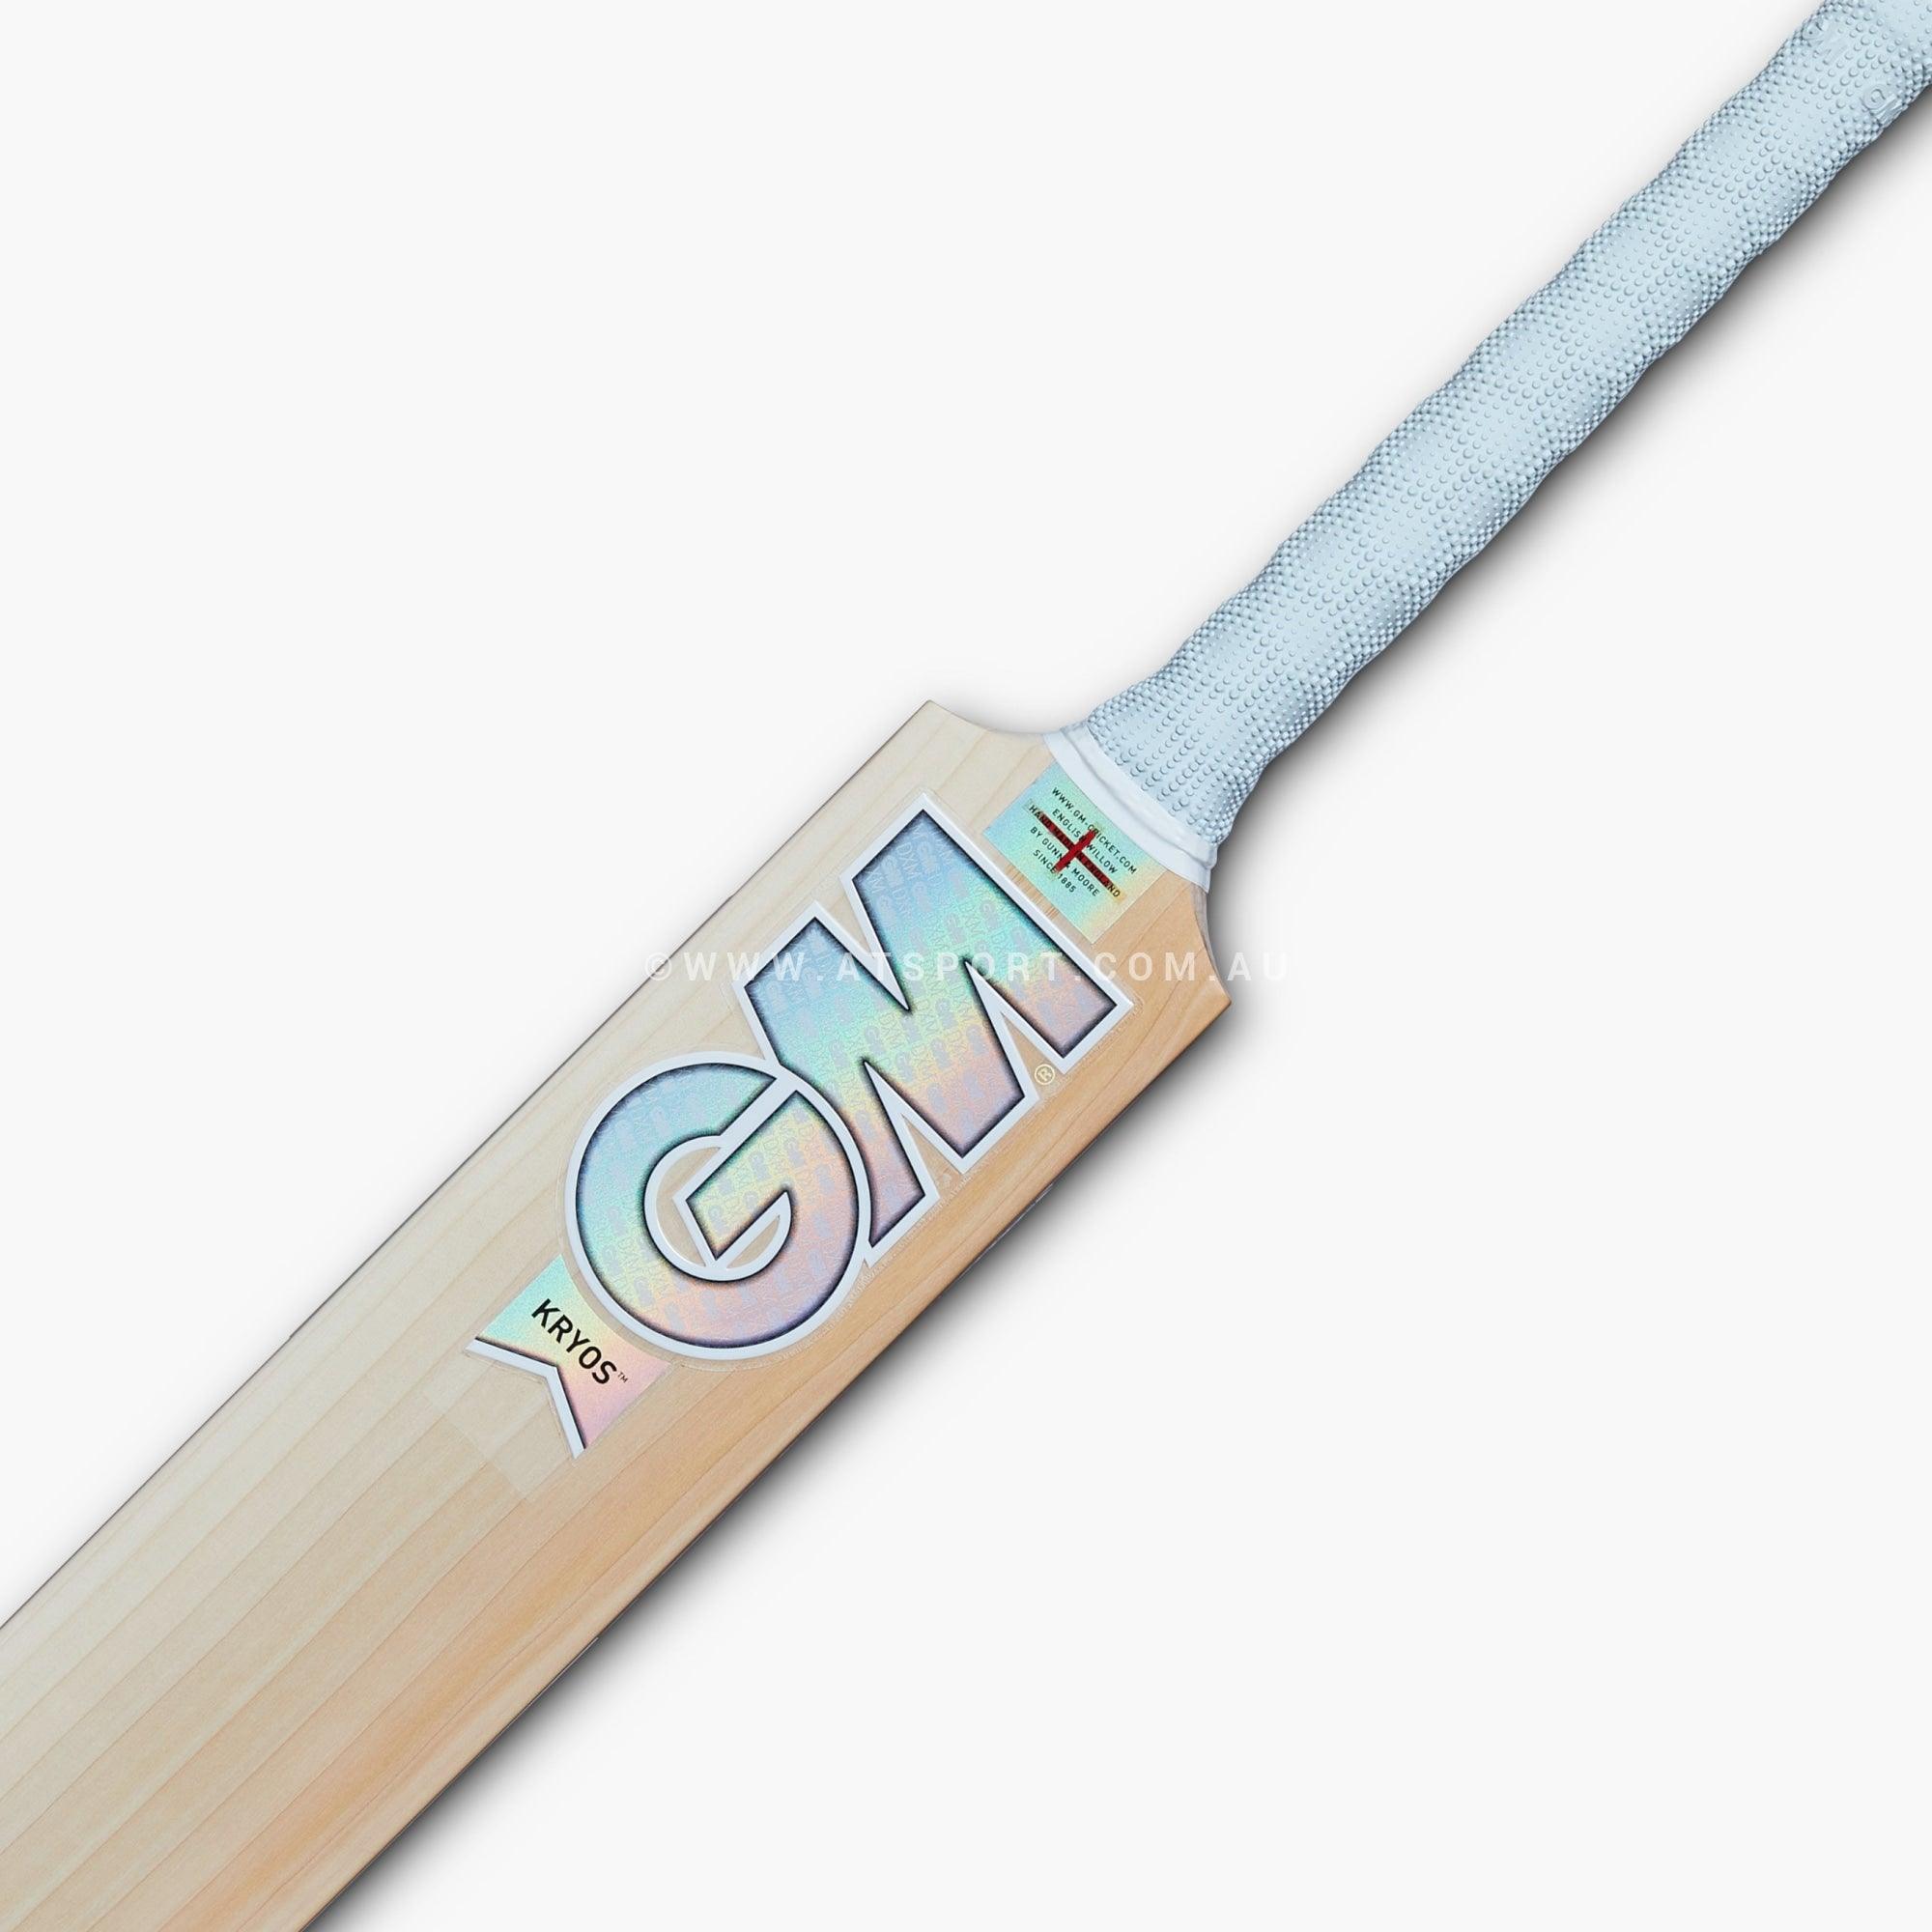 Gm Kryos Original Dxm Ttnow L540 English Willow Cricket Bat - Sh Grade 1